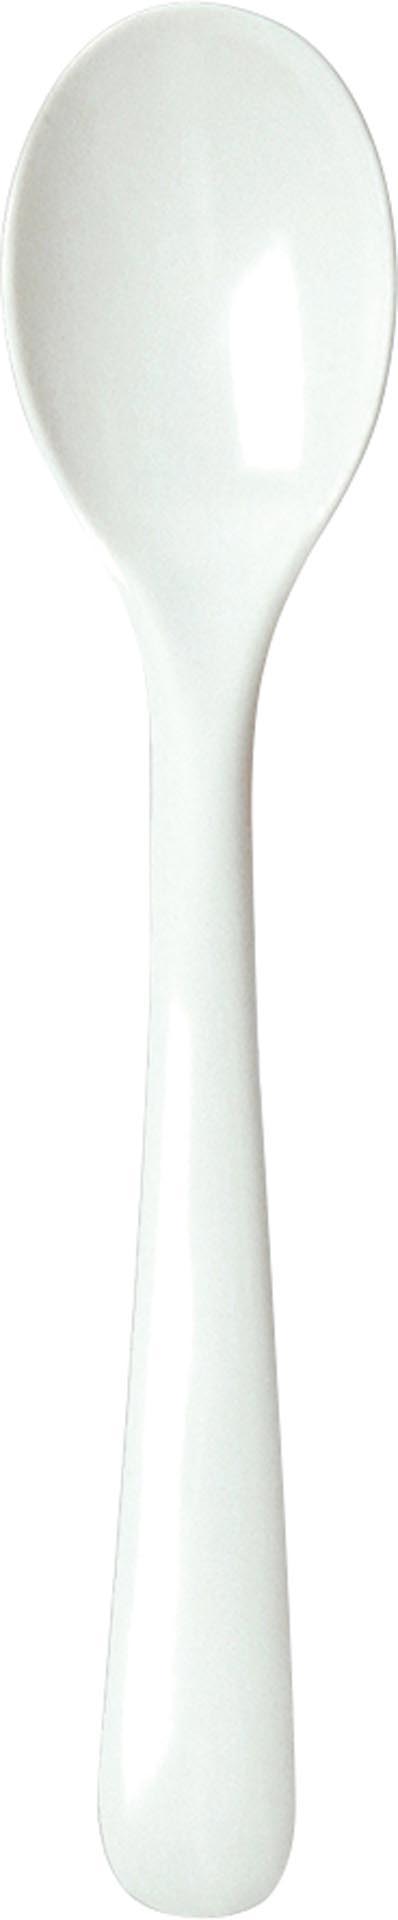 Eierlöffel 12 cm weiß Melamin 25er Pack S.137